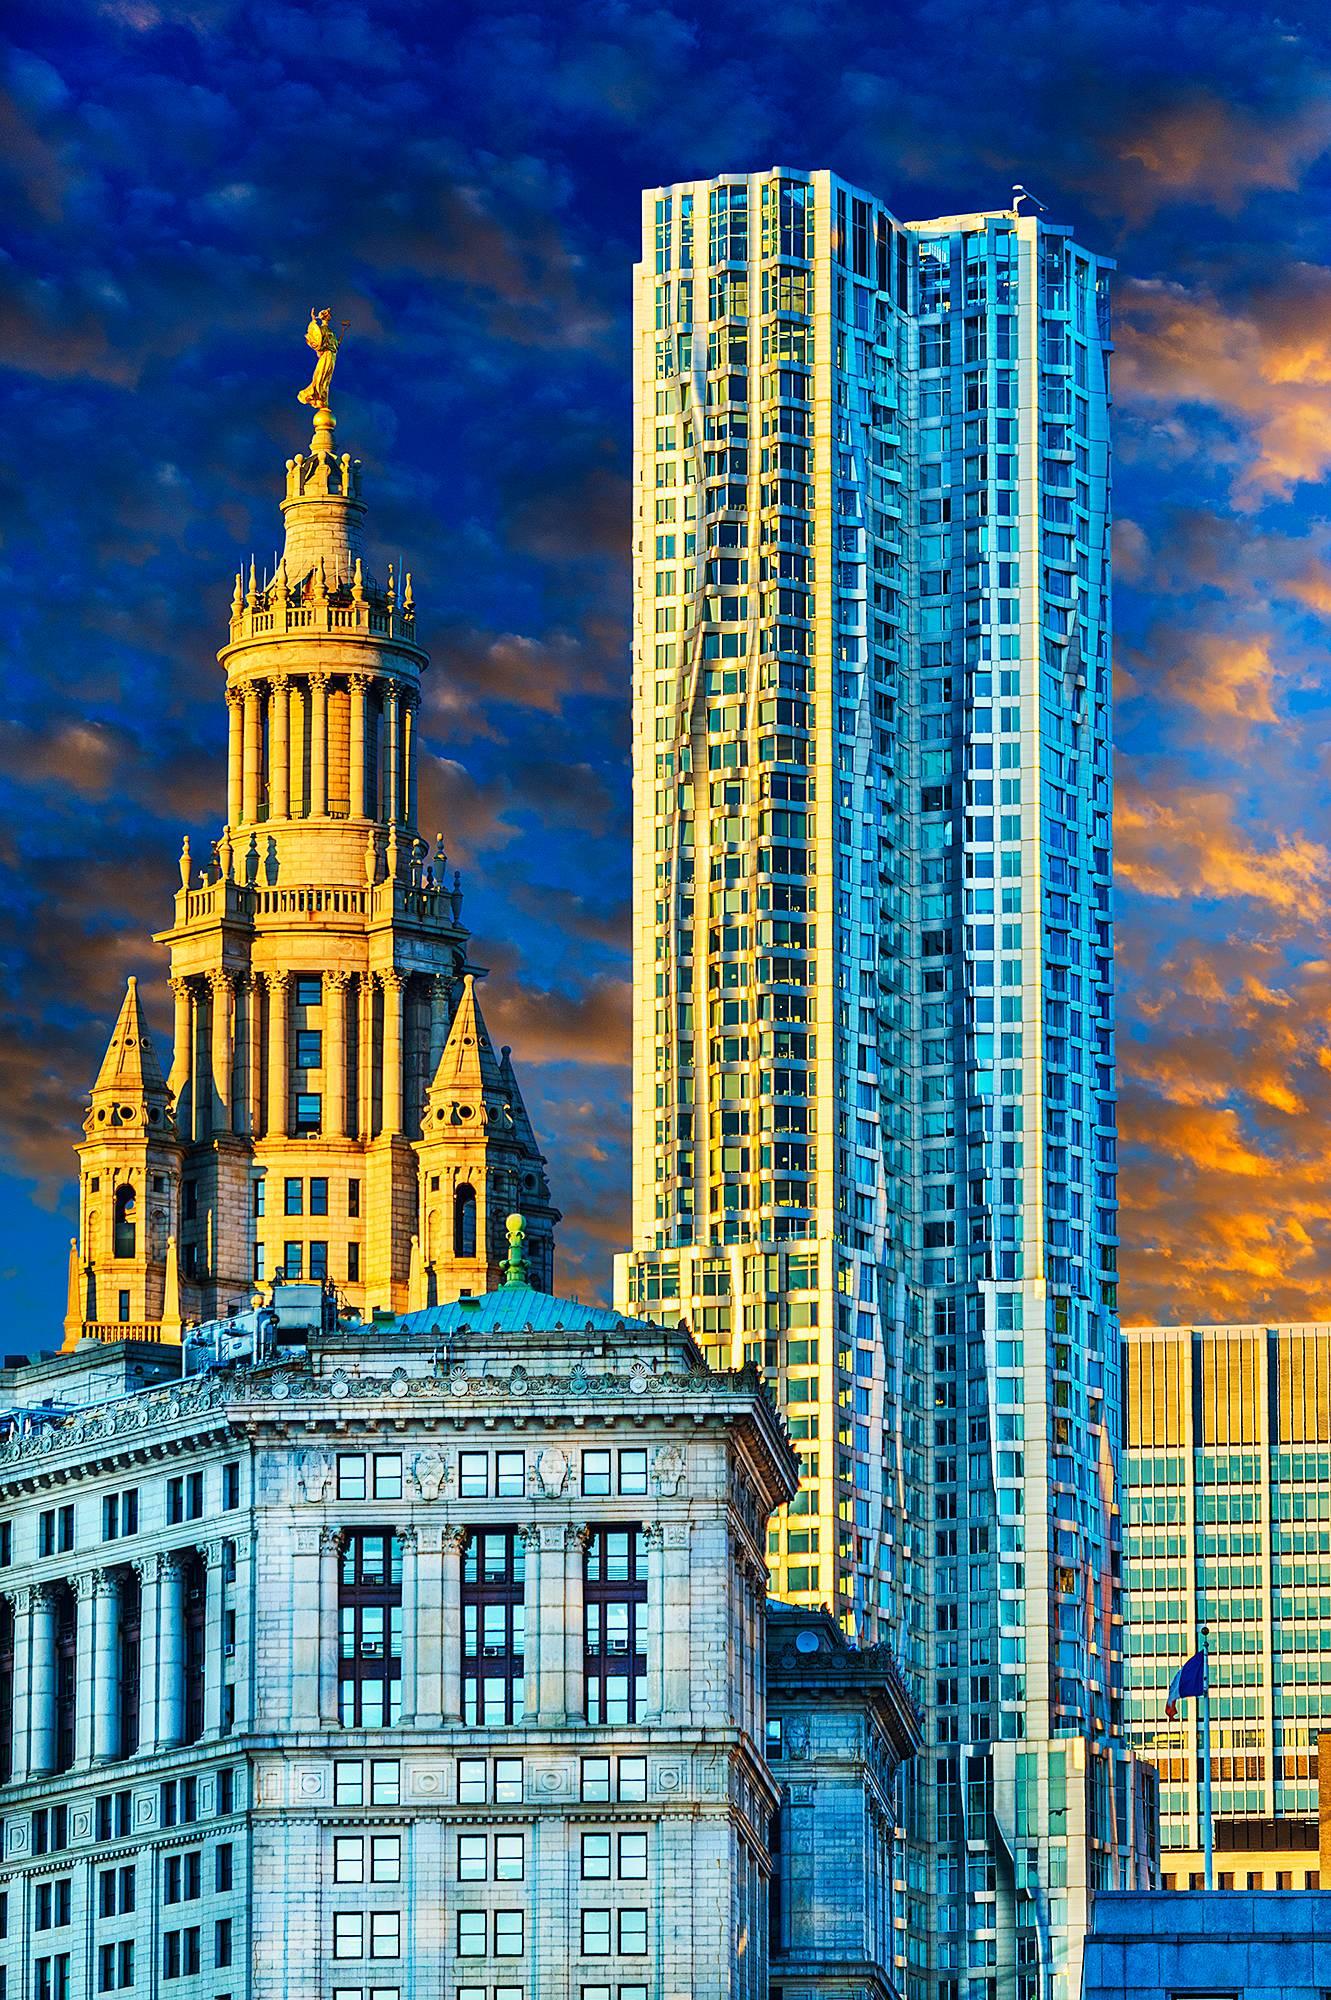 Mitchell Funk Color Photograph - Lower Manhattan Skyline Idyllic, New York City in Godly light 